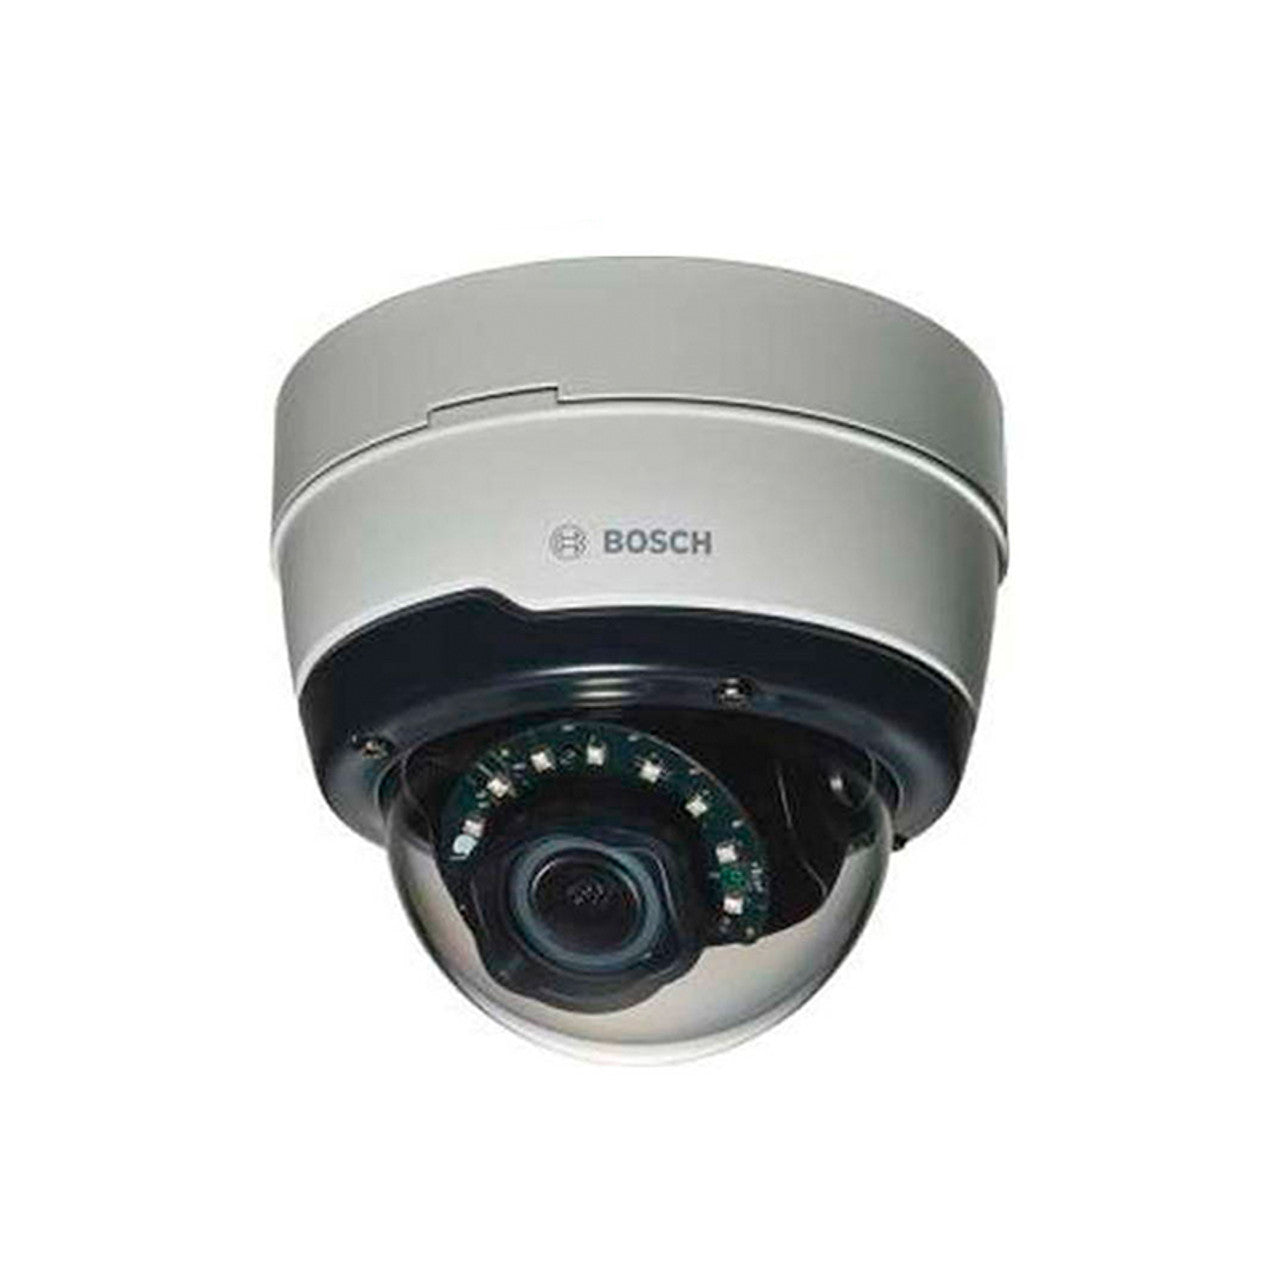 Bosch NDN-50022-A3 - IP Vandal Dome Outdoor  Camera 1080P/720P, 2.7-9mm AVF, IP66